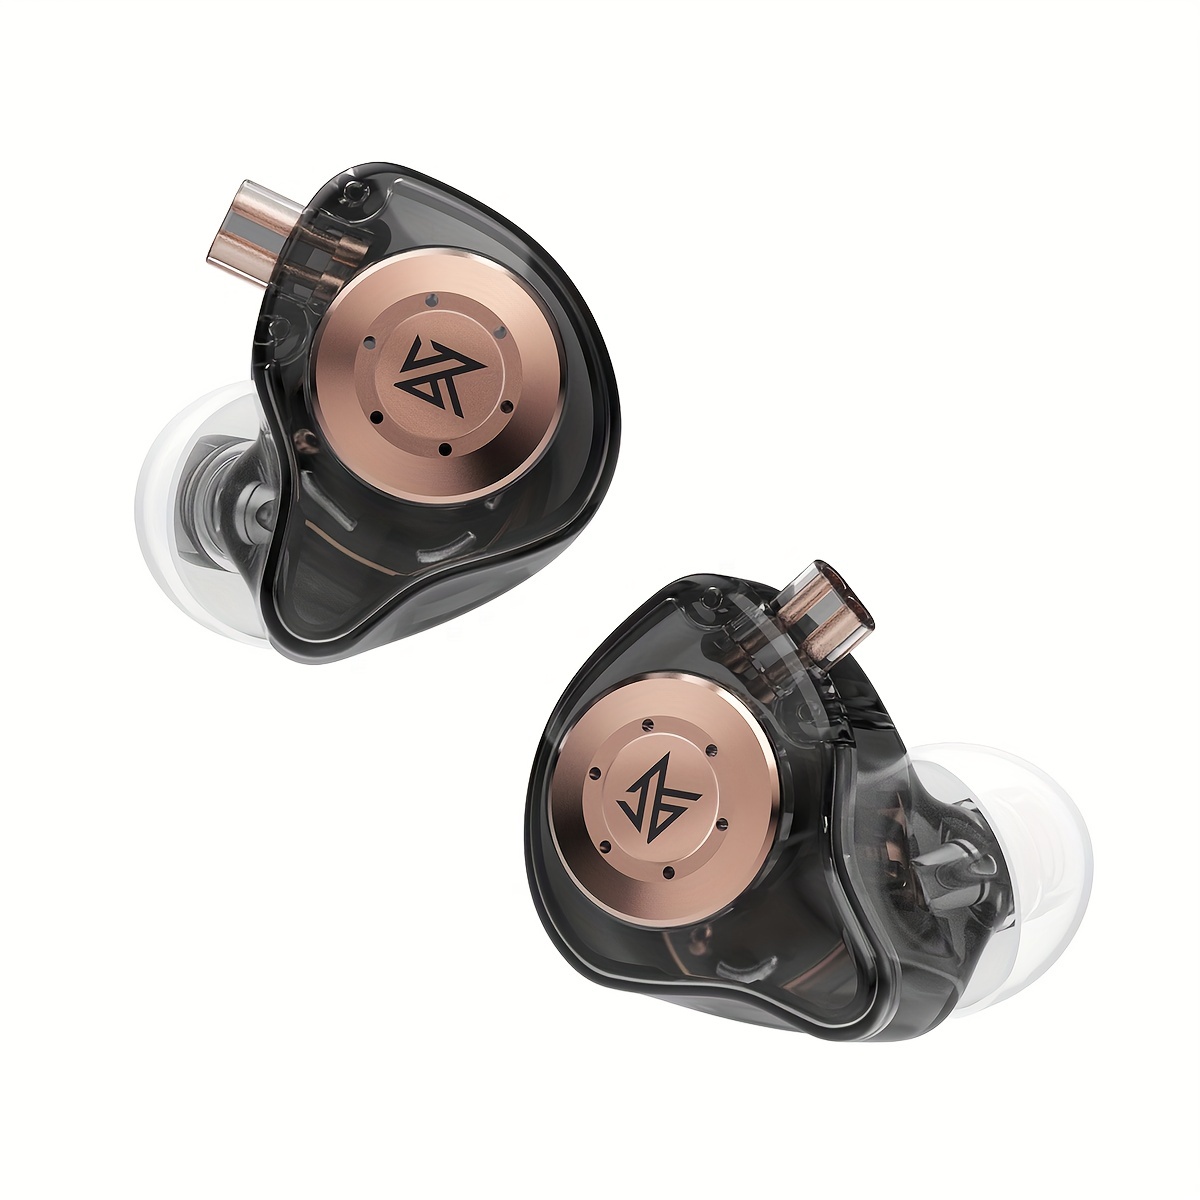  KZ EDX Pro in-Ear Monitor Headphones Wired, IEM Earphones,Dual  DD HiFi Stereo Sound Earphones Noise Cancelling Earbuds(Black,No Mic) :  Electronics